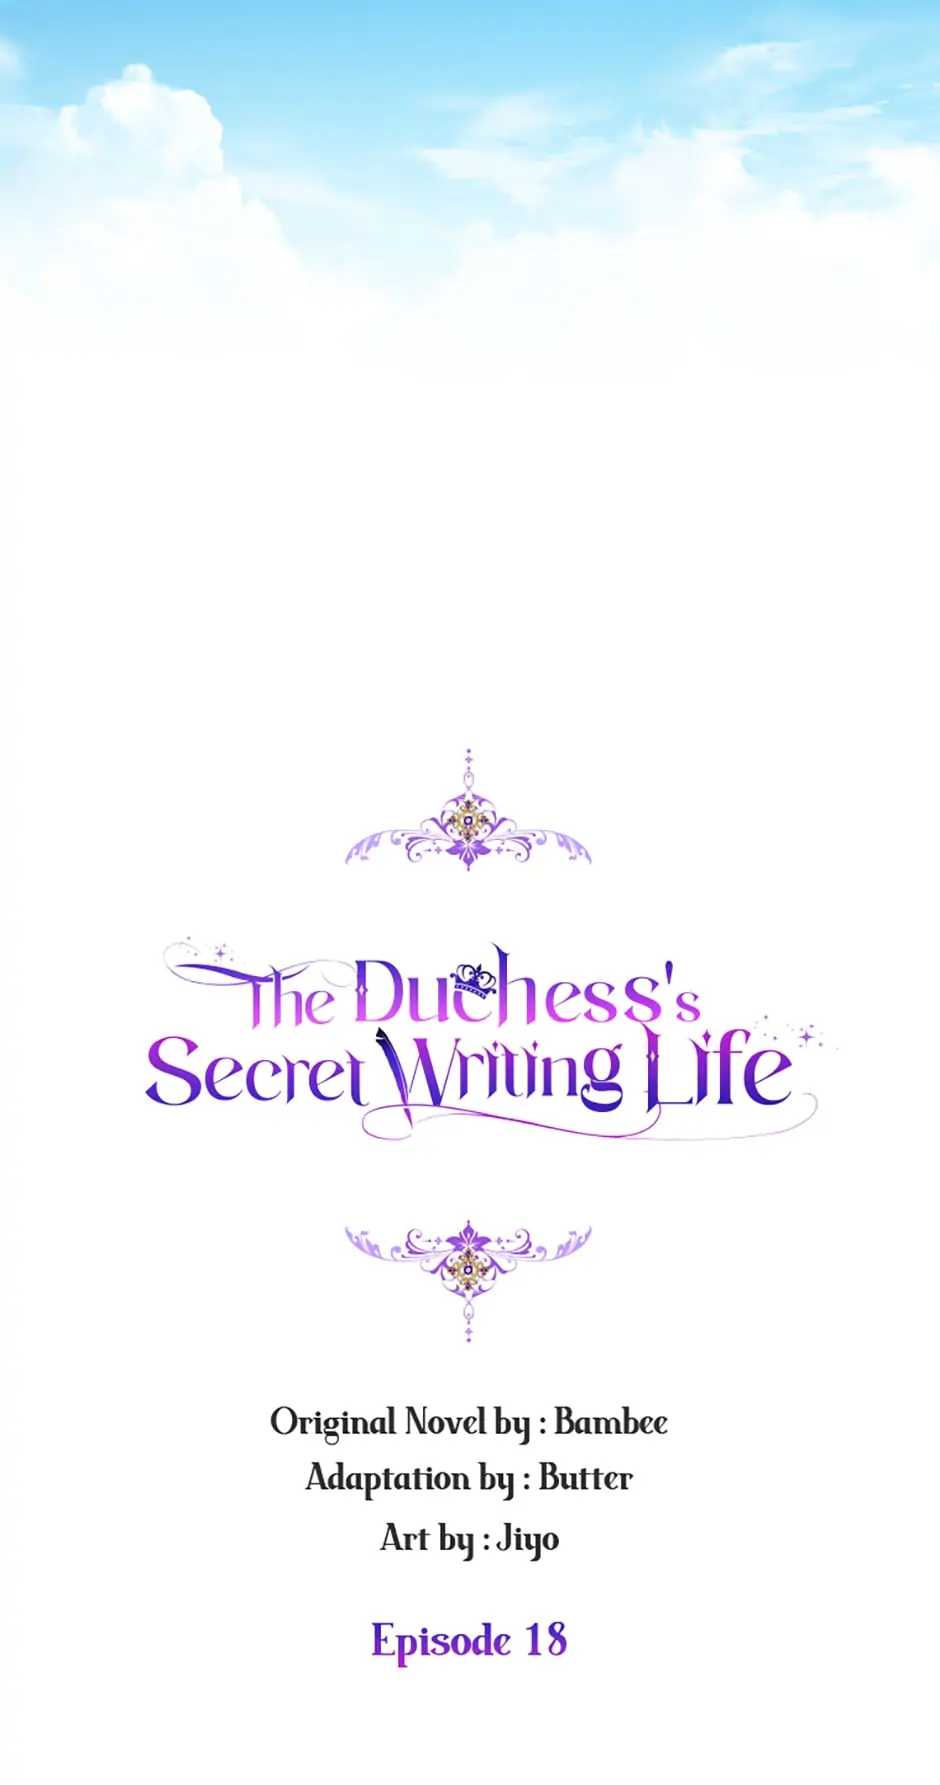 The Duchess’ Secret Writings chapter 18